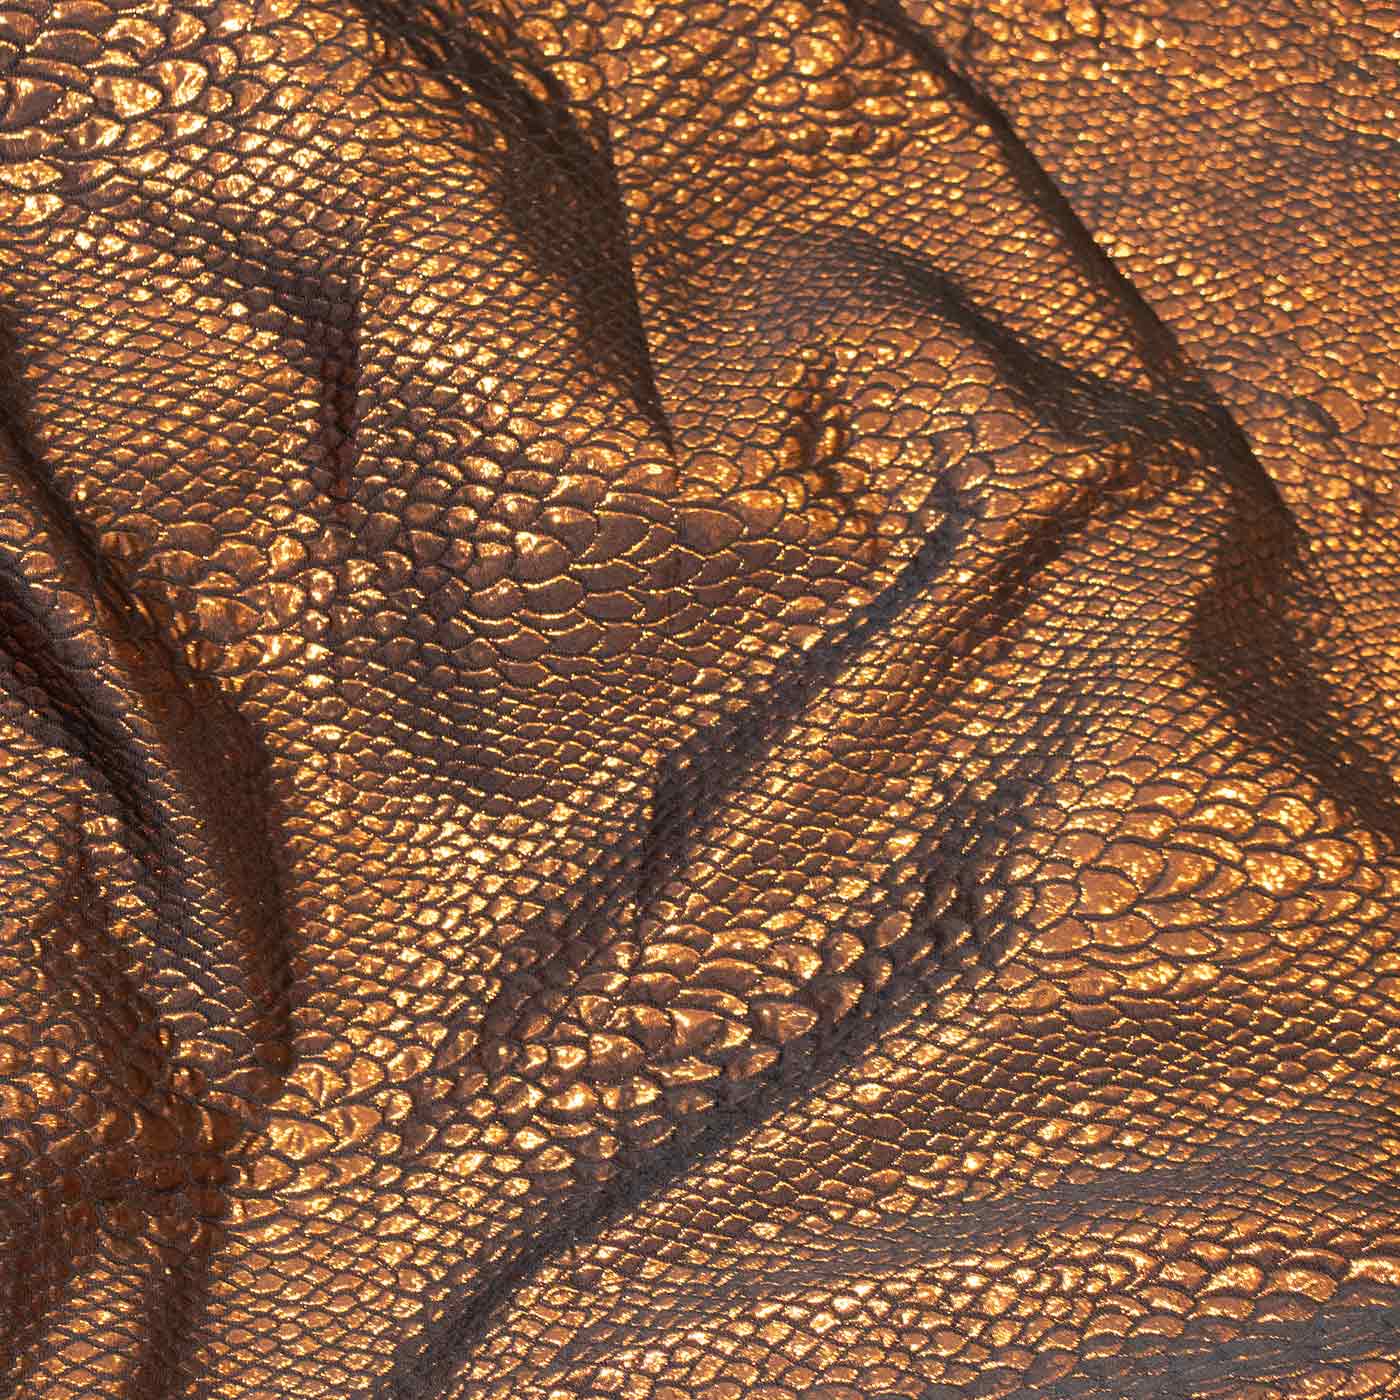 Bronze and Black Iridescent Brocade Fabric